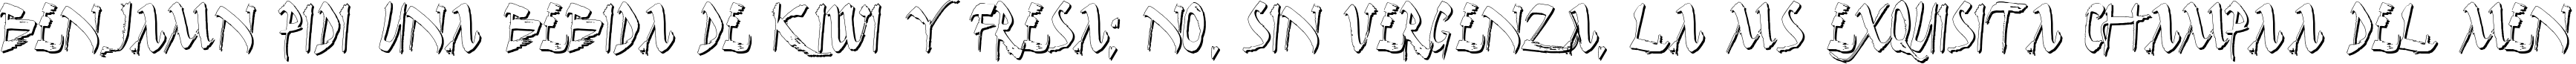 Пример написания шрифтом Dark Horse Shadow текста на испанском